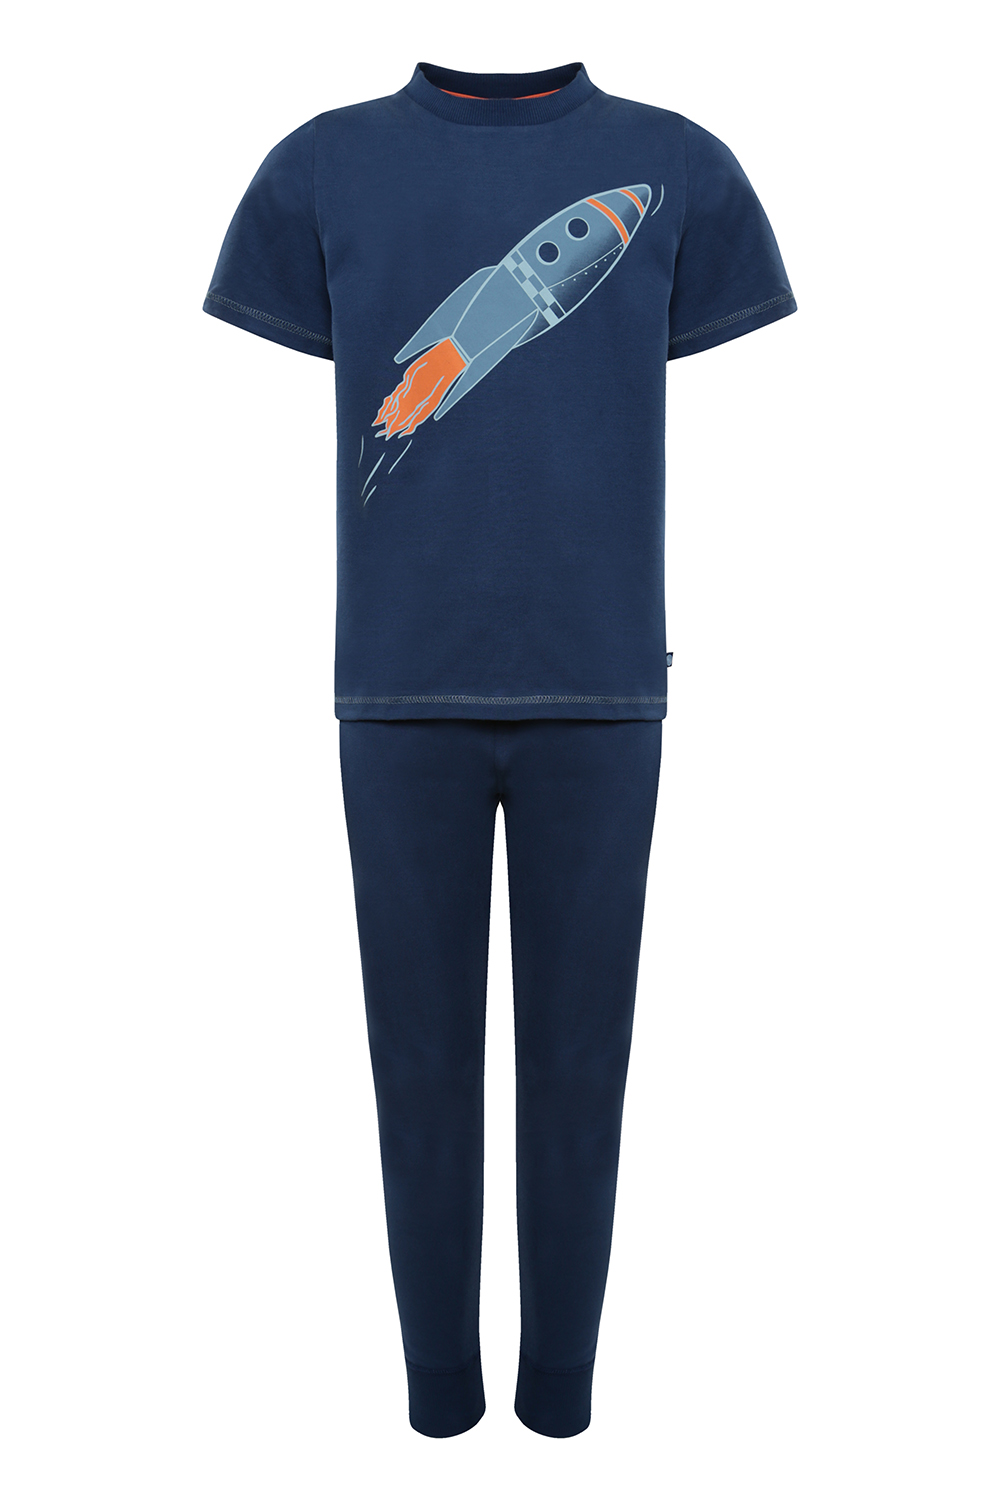 Синяя пижама с принтом ракета